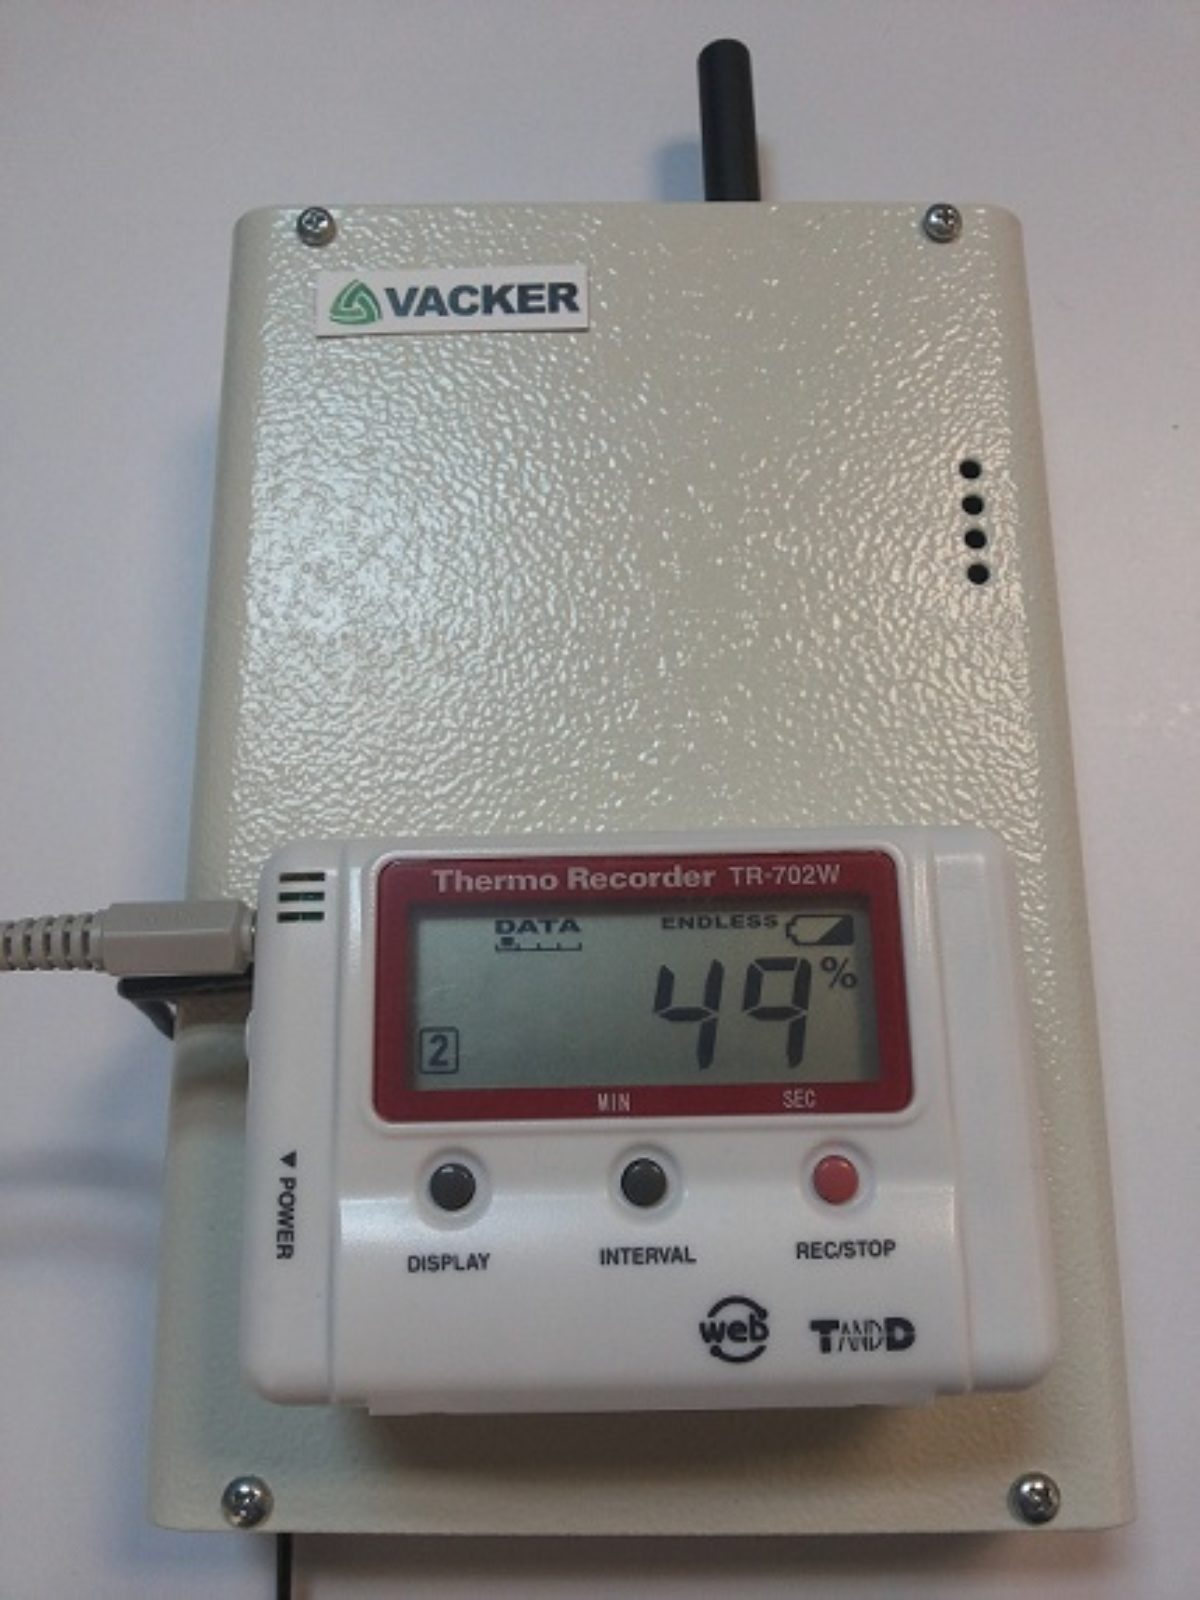 Validation protocol for wireless temperature monitoring, Vacker UAE